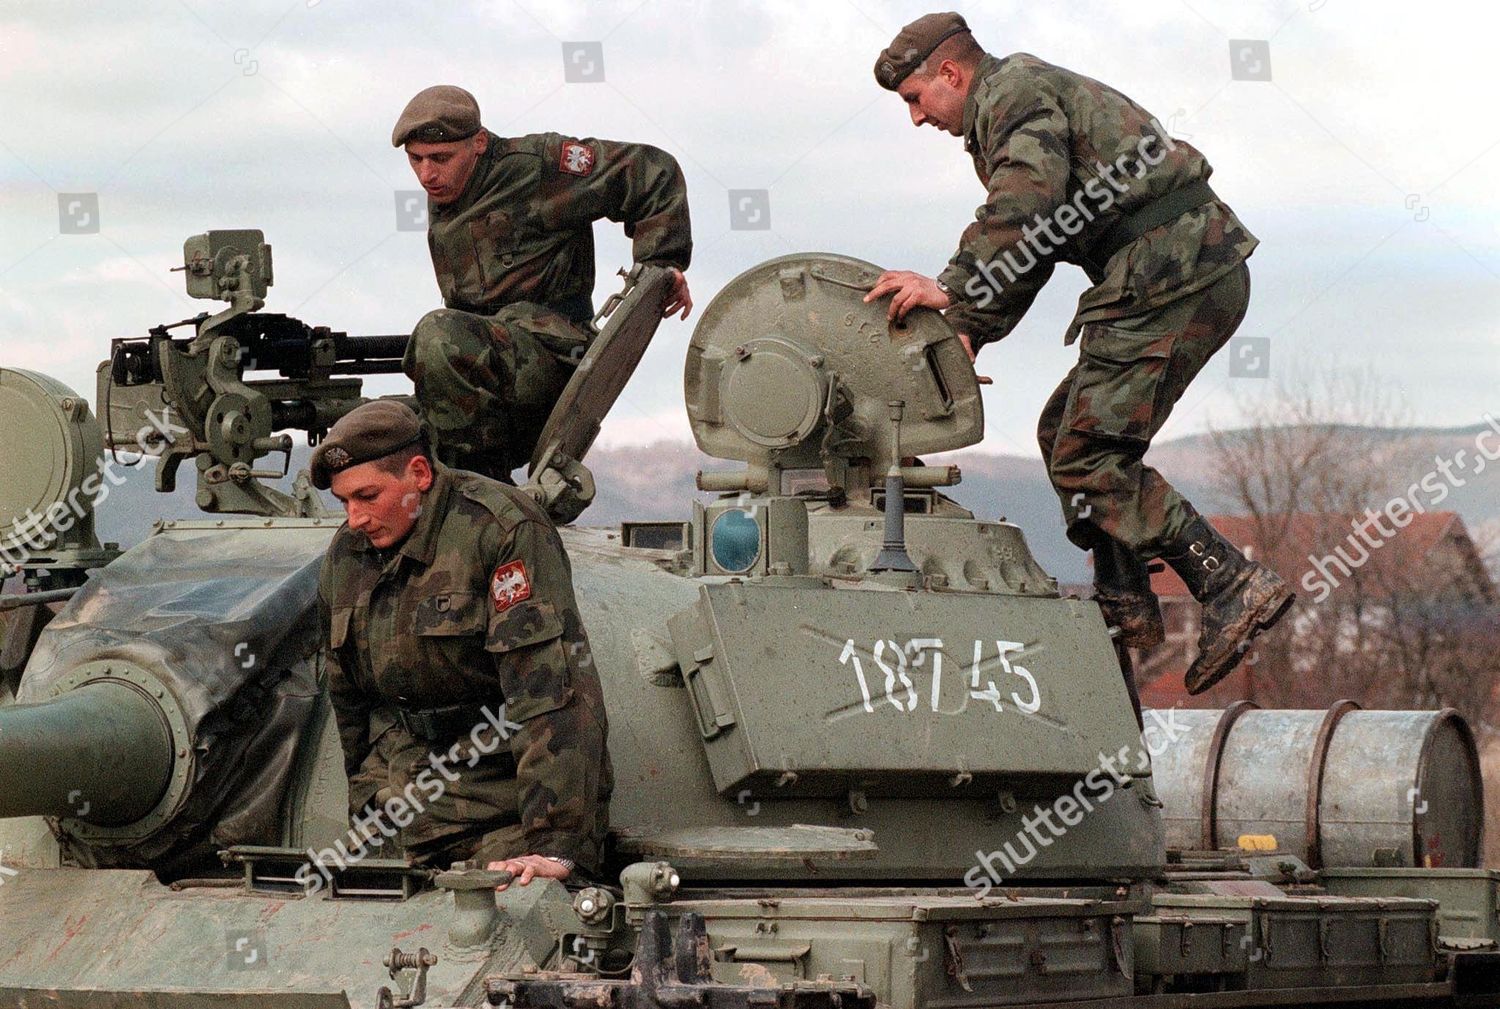 yugoslavia-bujanovac-tank-mar-2000-shutterstock-editorial-7734026a.jpg